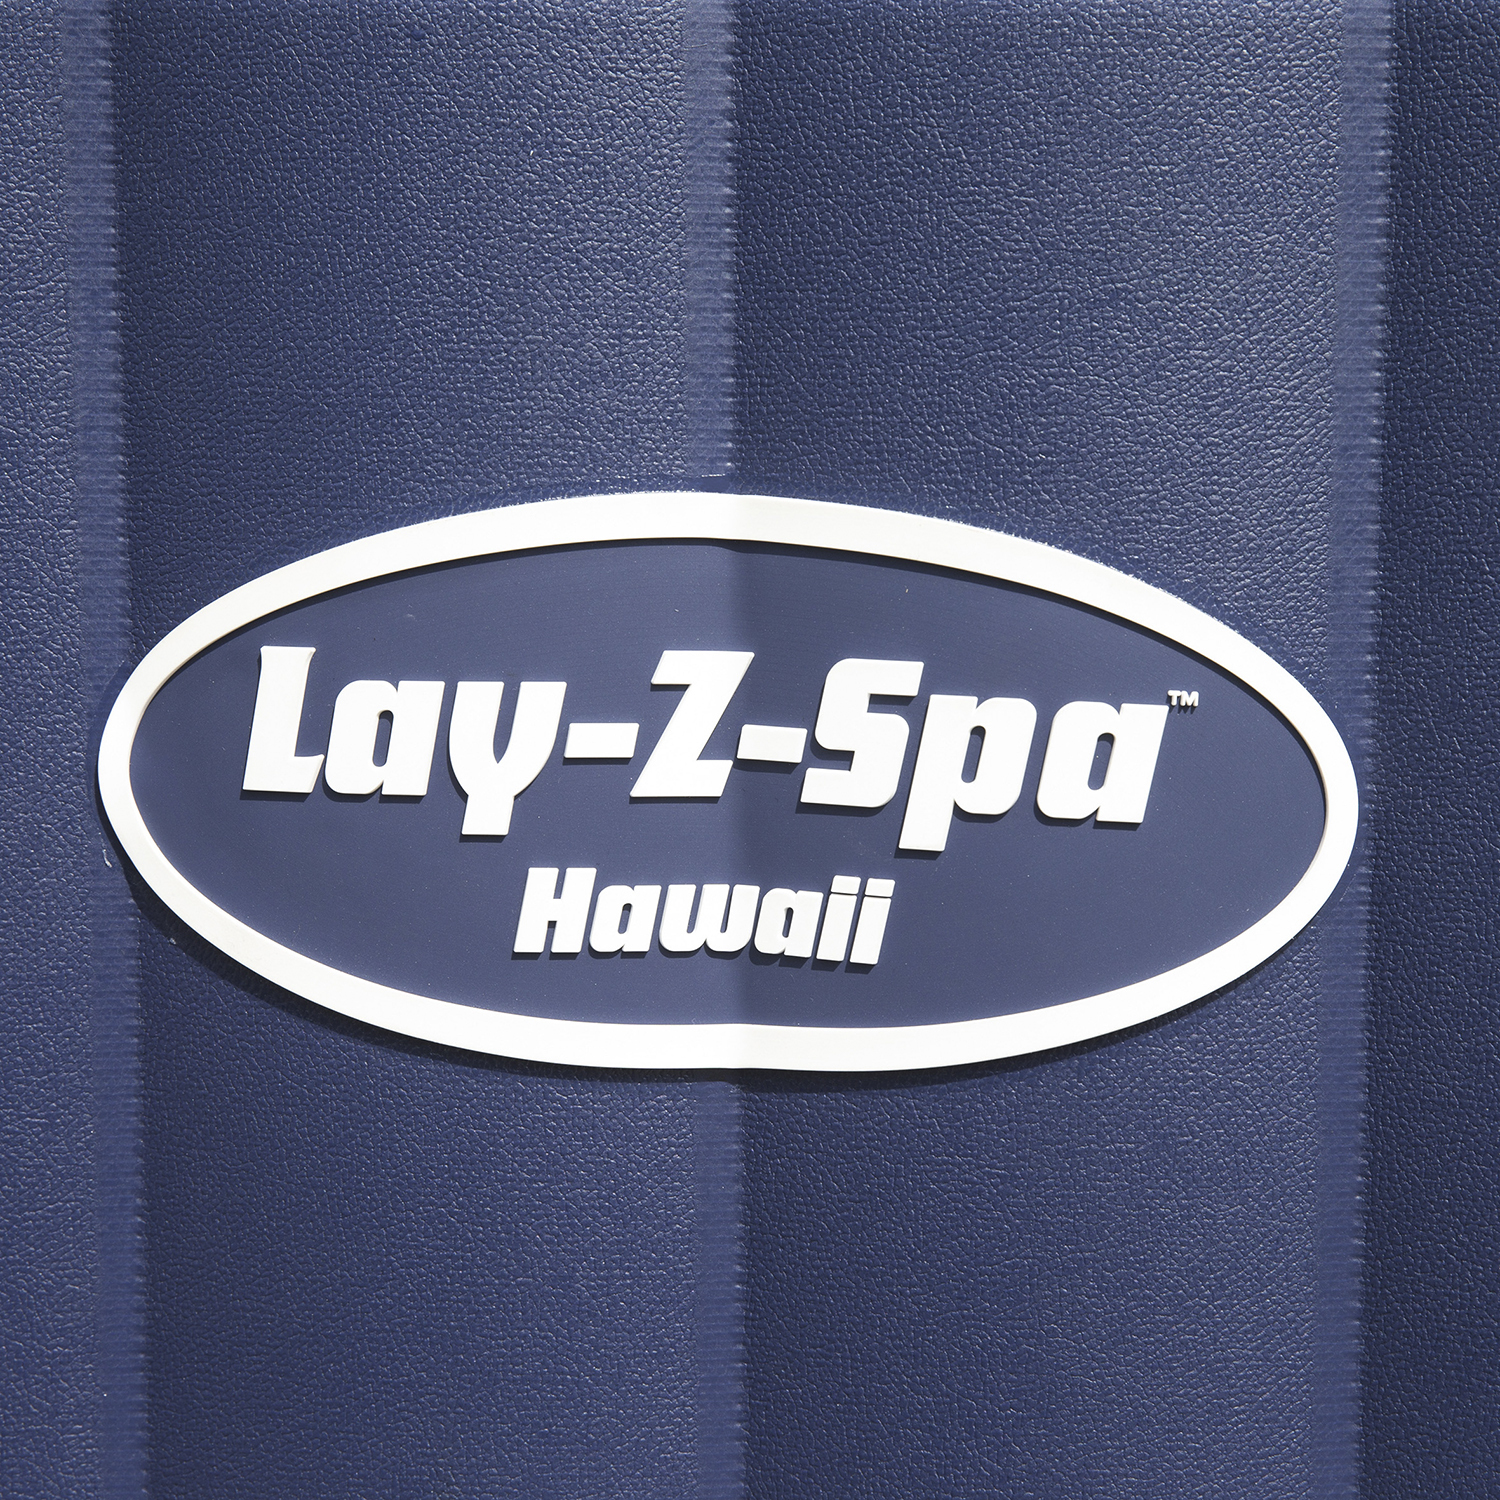 Lay-Z-Spa Hawaii AirJet Image 6